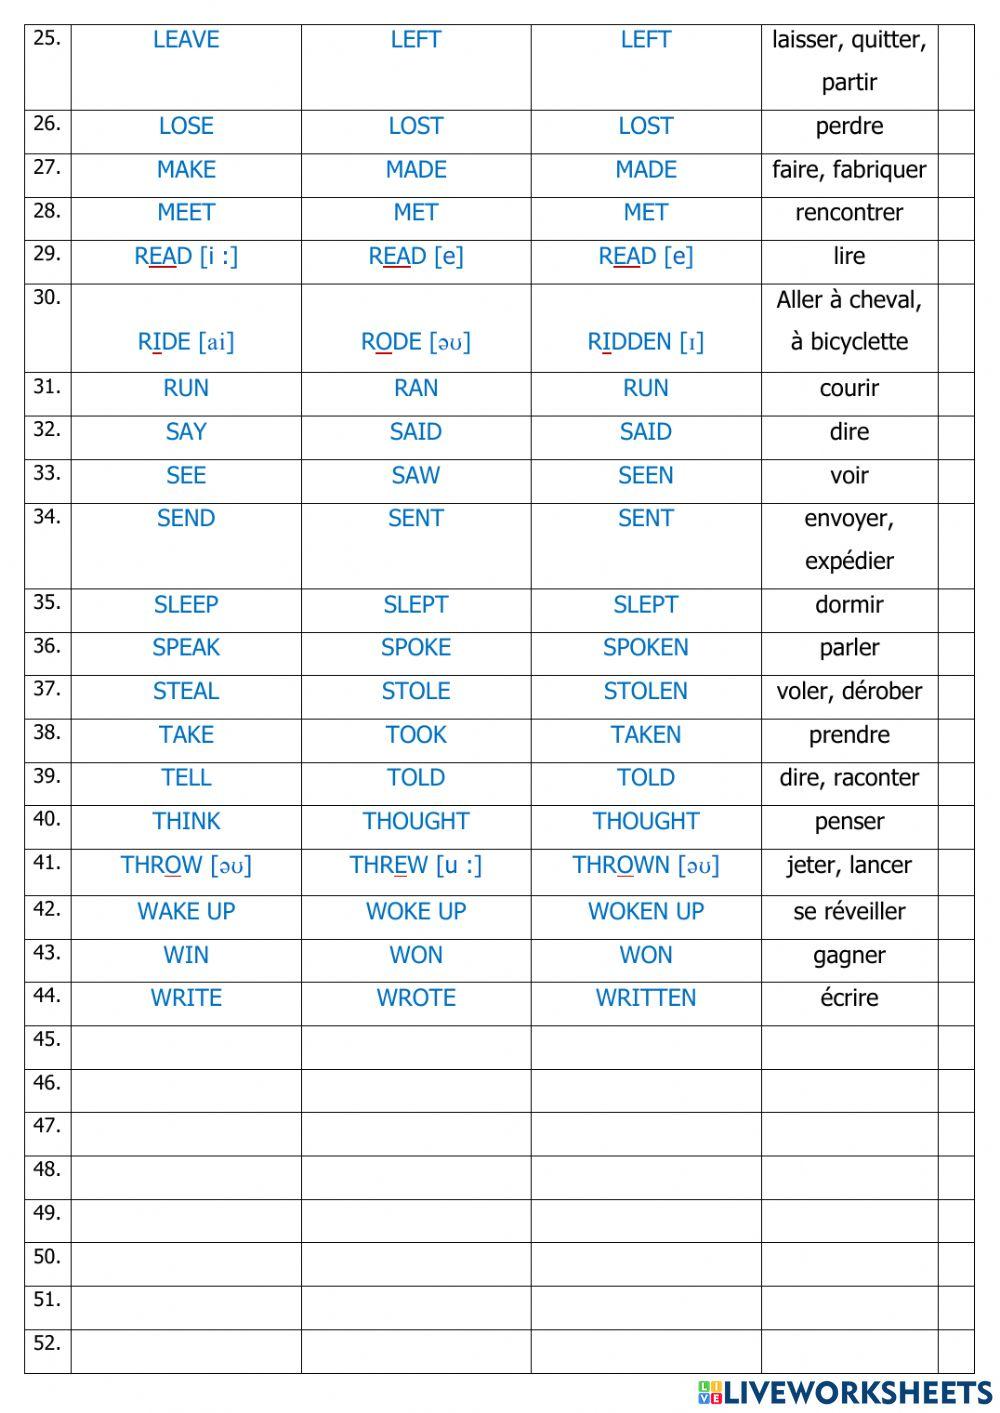 Irregular verbs list with audio